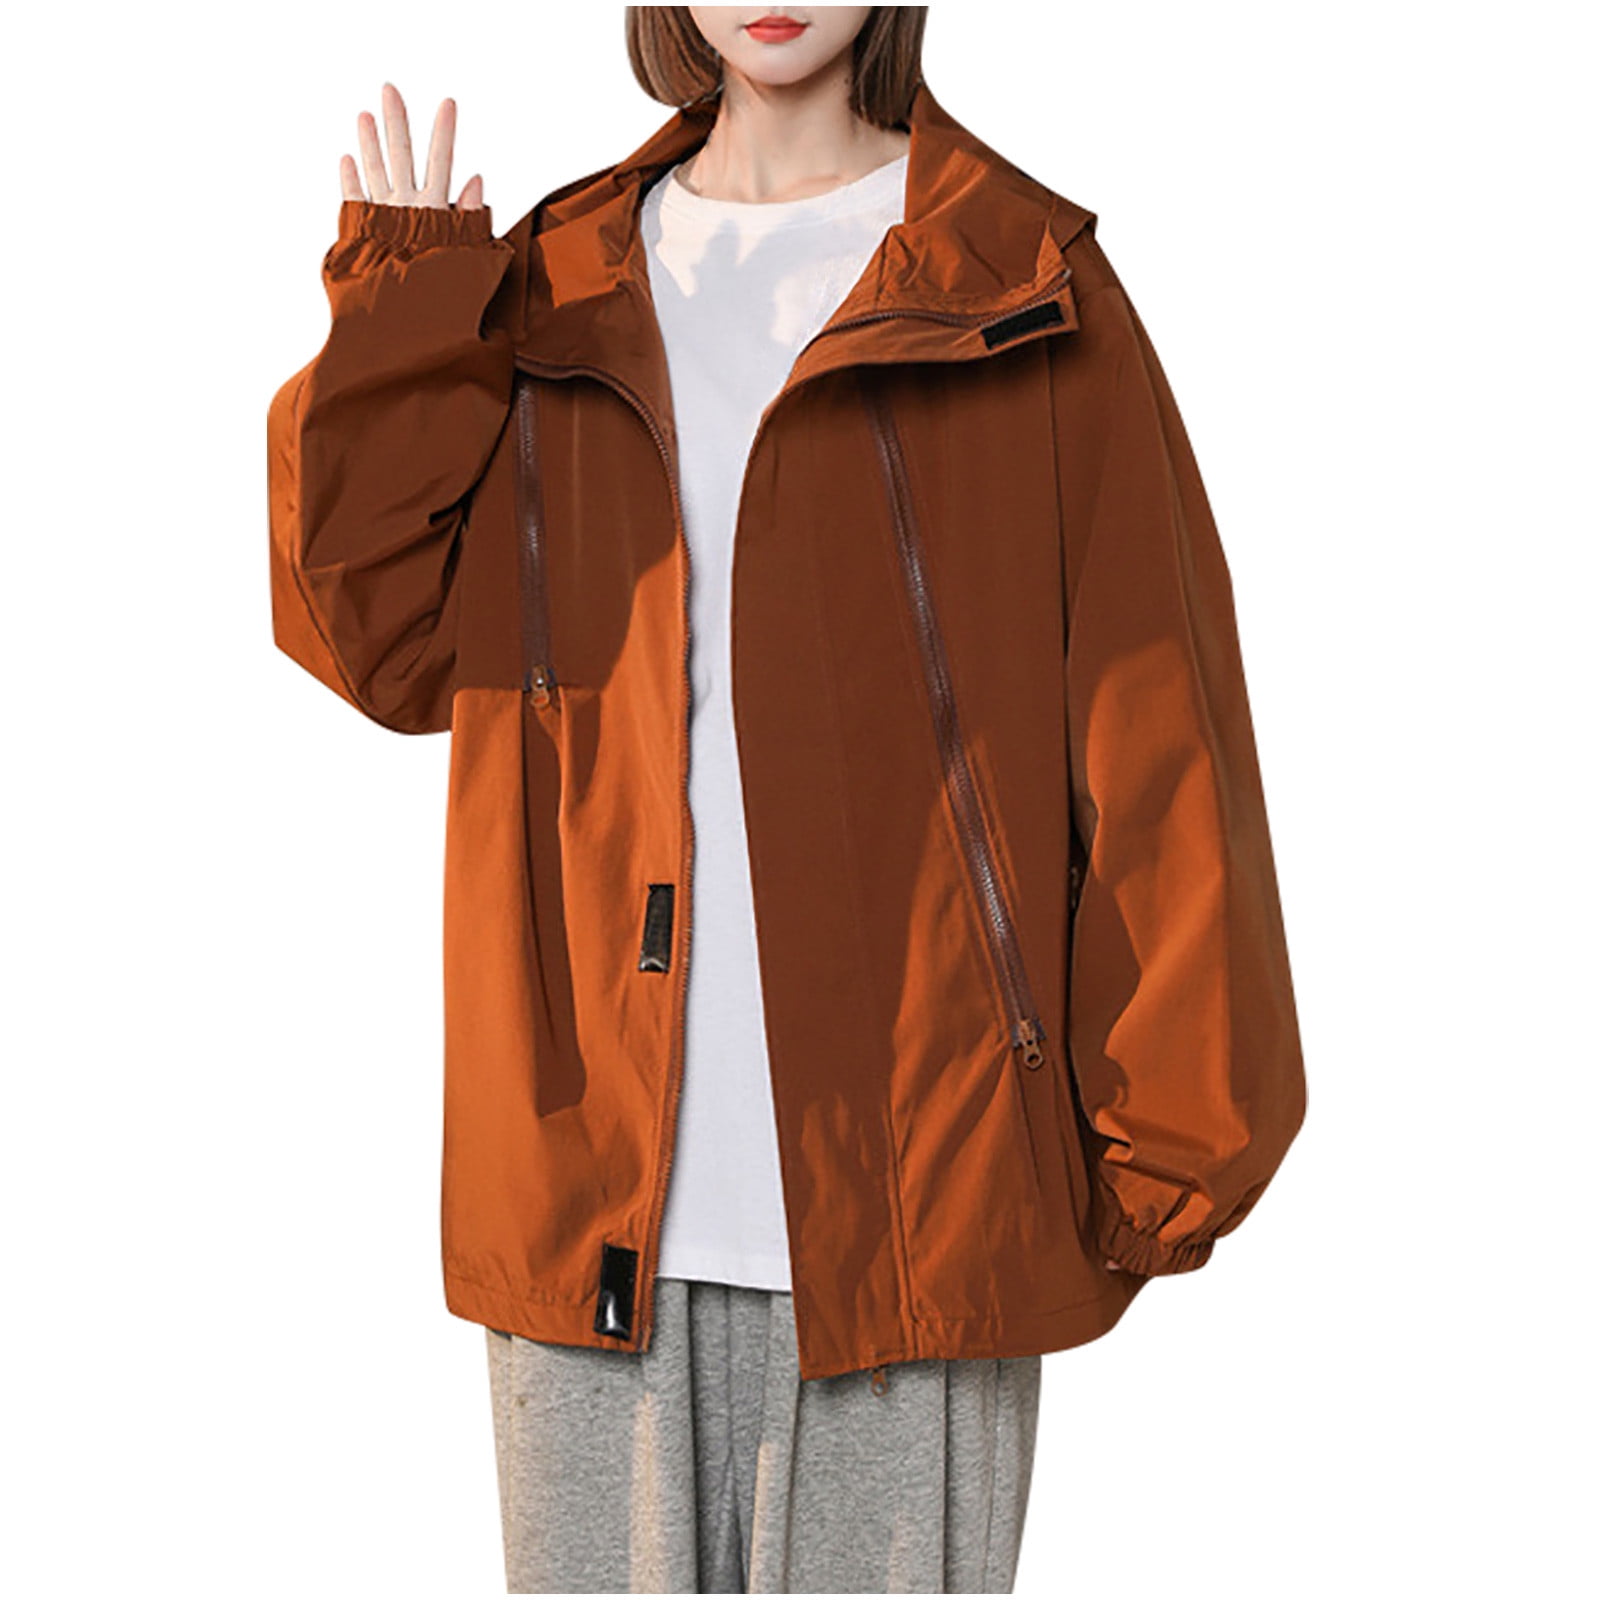 MASRIN Plus Size Jackets for Women 4X-5X Plus Size Rain Jackets Women  Lightweight Waterproof Rain Coat with Hood Full Zip Drawstring Raincoat  Hiking